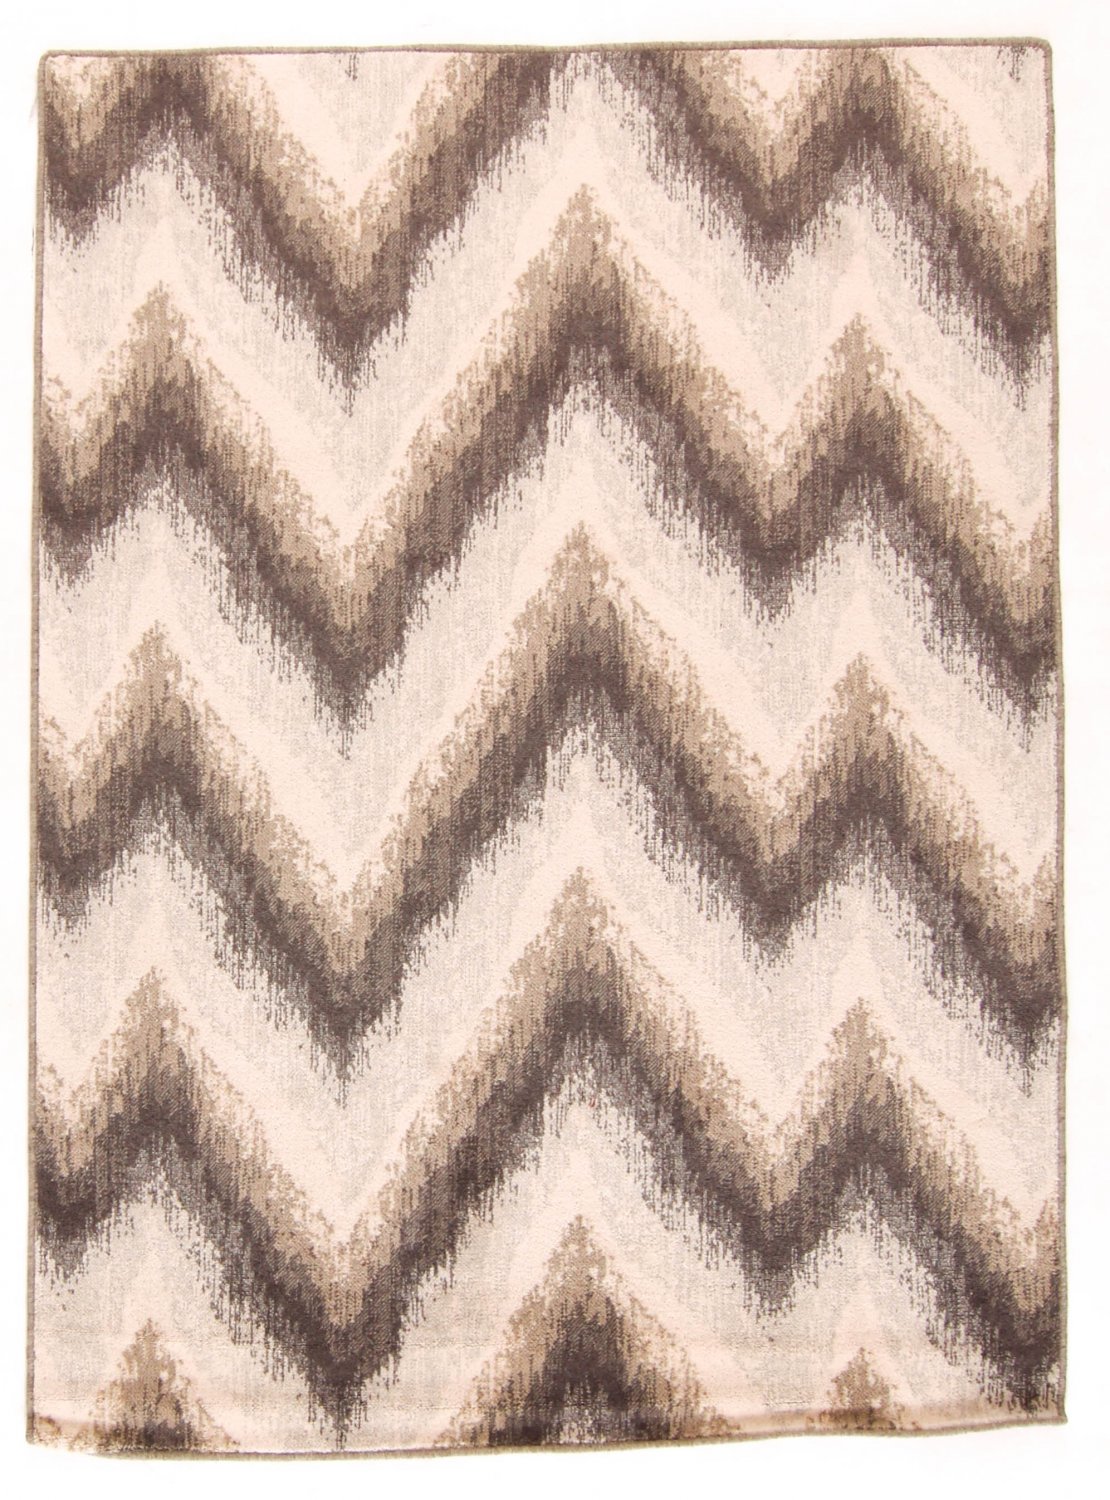 Wool rug -
Arbela (grey)